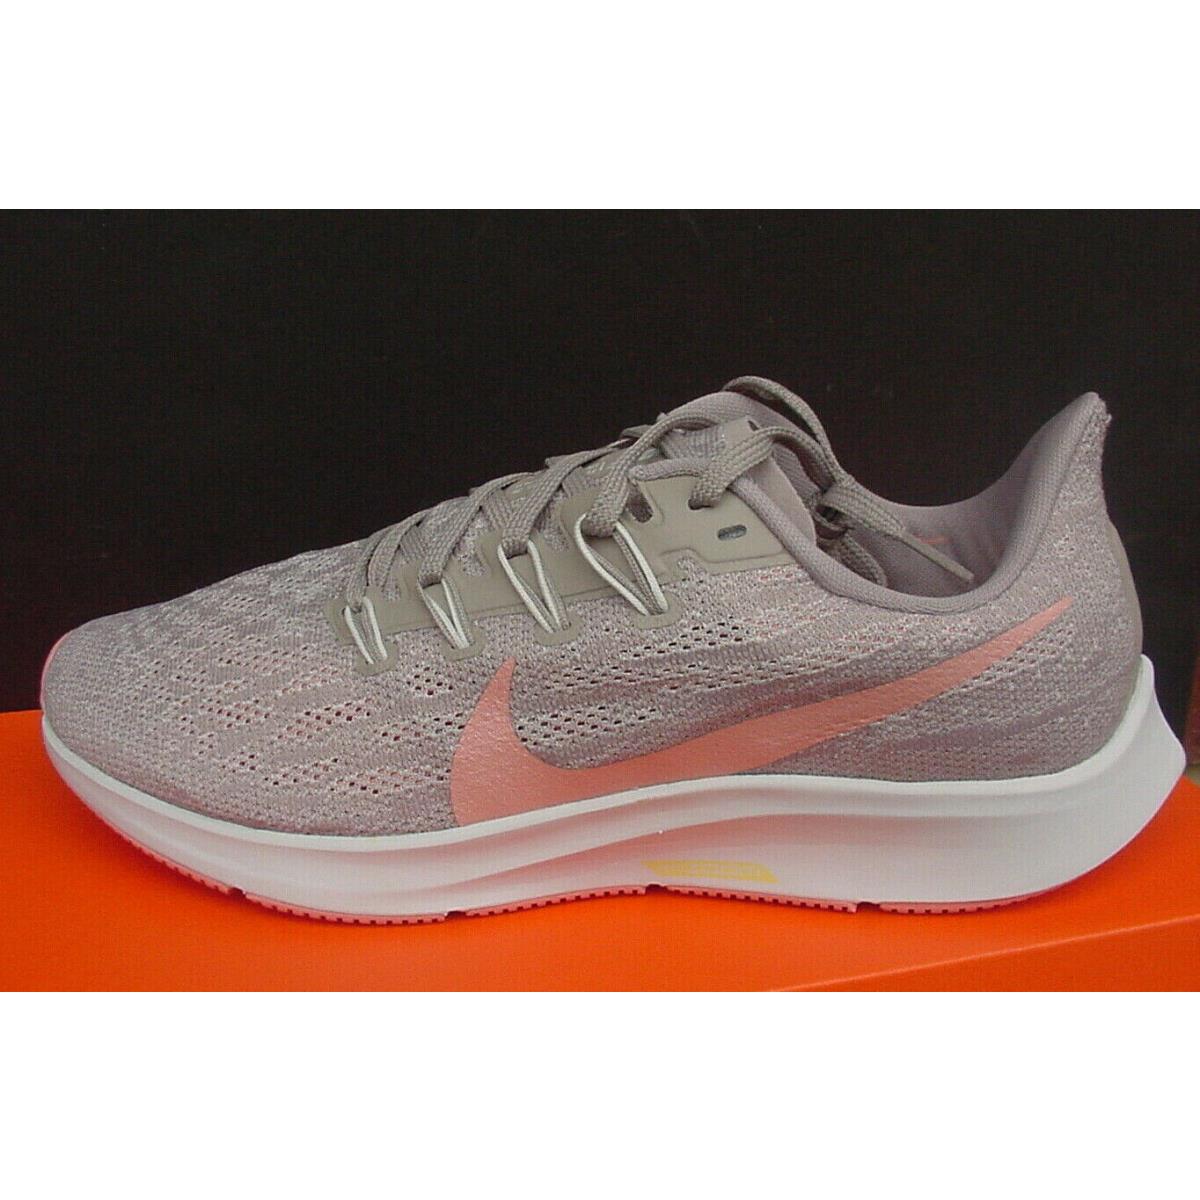 Nike Women`s Shoe Pumice Taupe Nude Air Zoom Pegasus 36 AQ2210-200 Sz 9.5